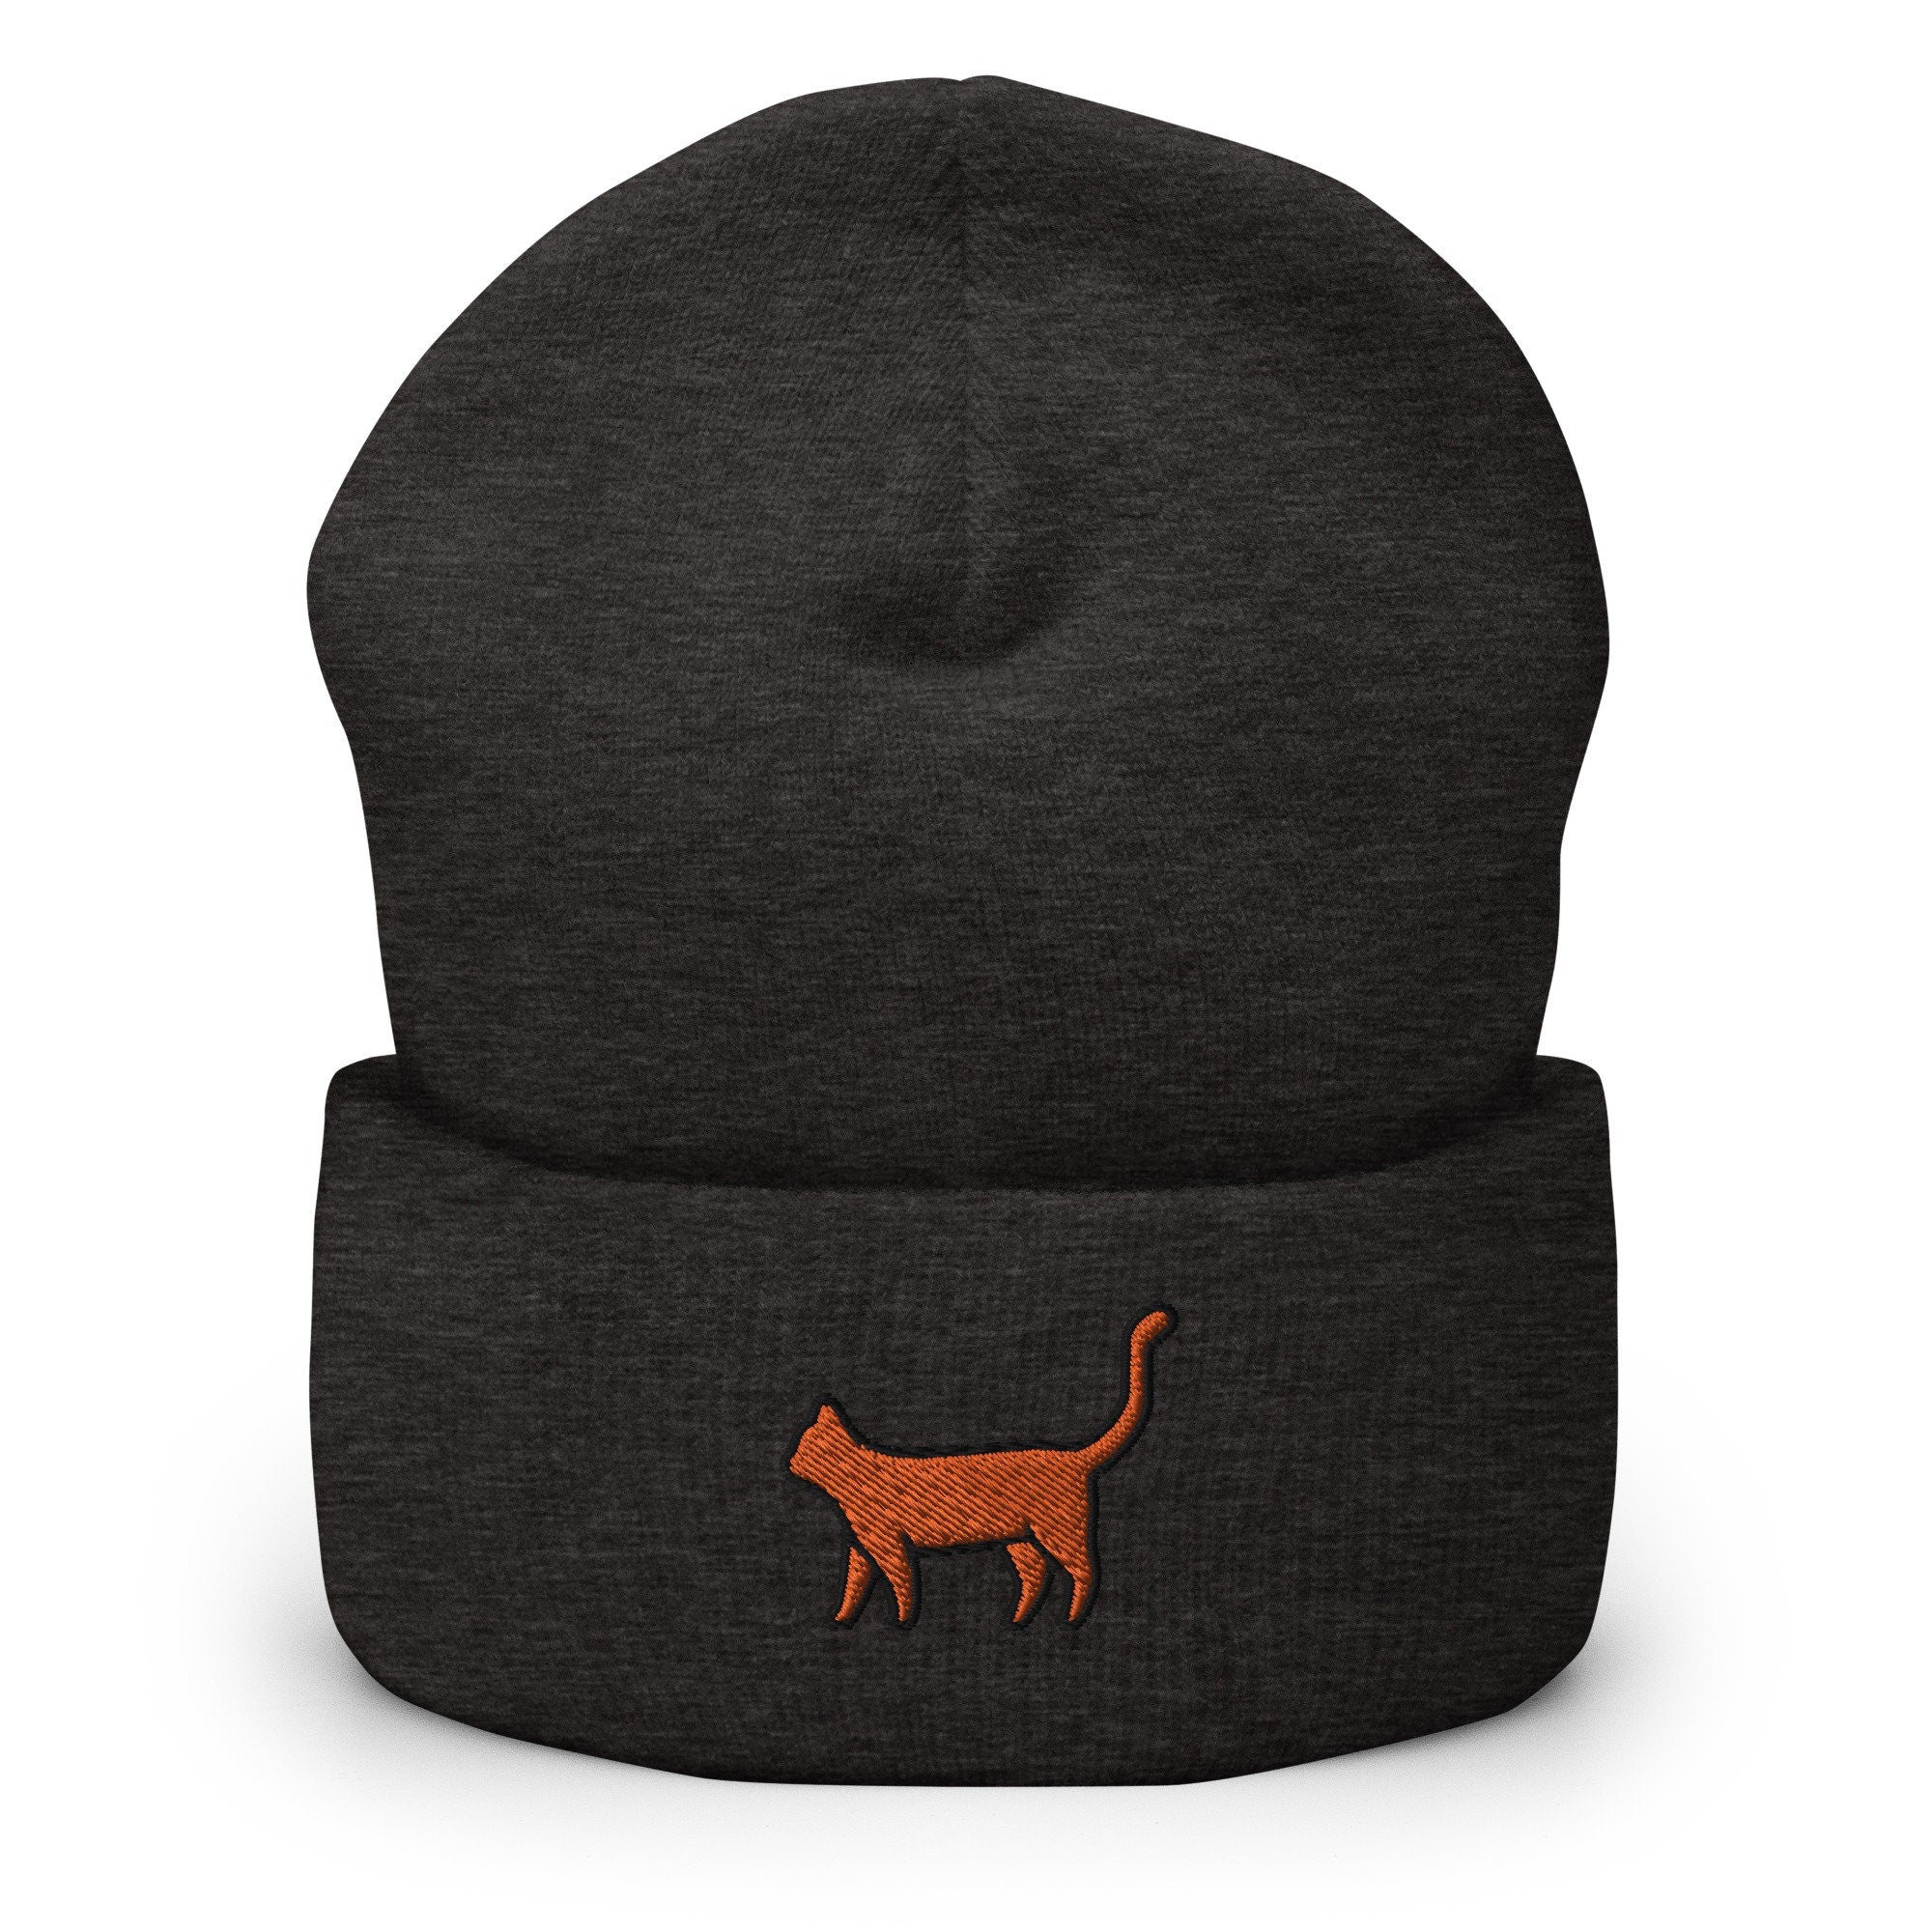 Orange Tabby Cat Lover Gift, Orange Cat Kitty Kitten Embroidered Beanie, Handmade Cuffed Knit Unisex Slouchy Adult Winter Hat Cap Gift